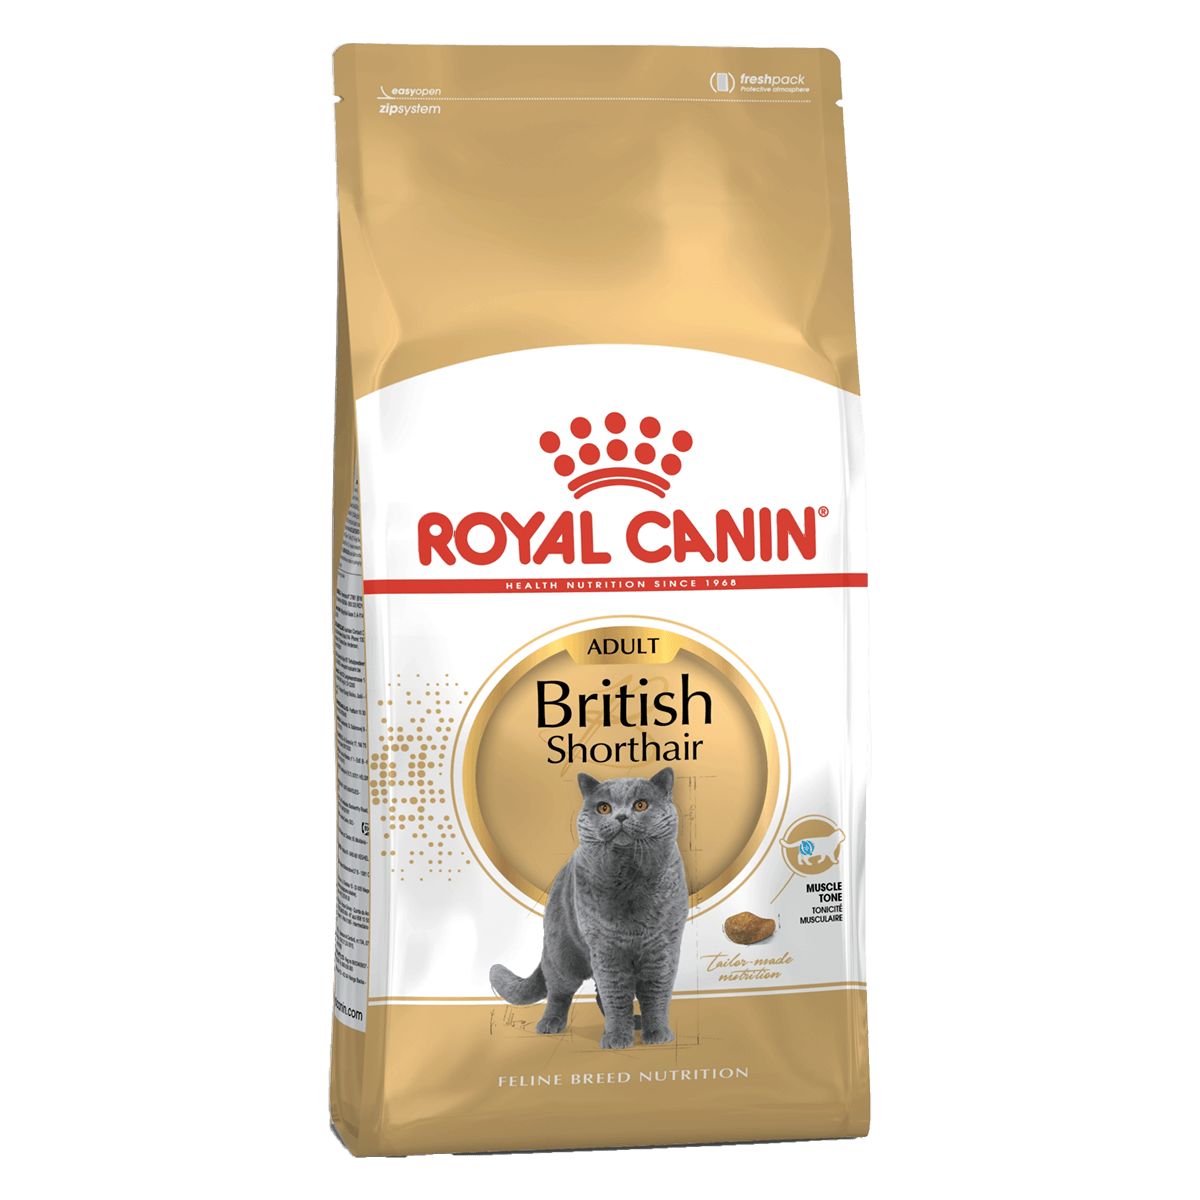 Royal Canin British Shorthair, 400 г - корм Роял Канин для британских короткошерстных кошек